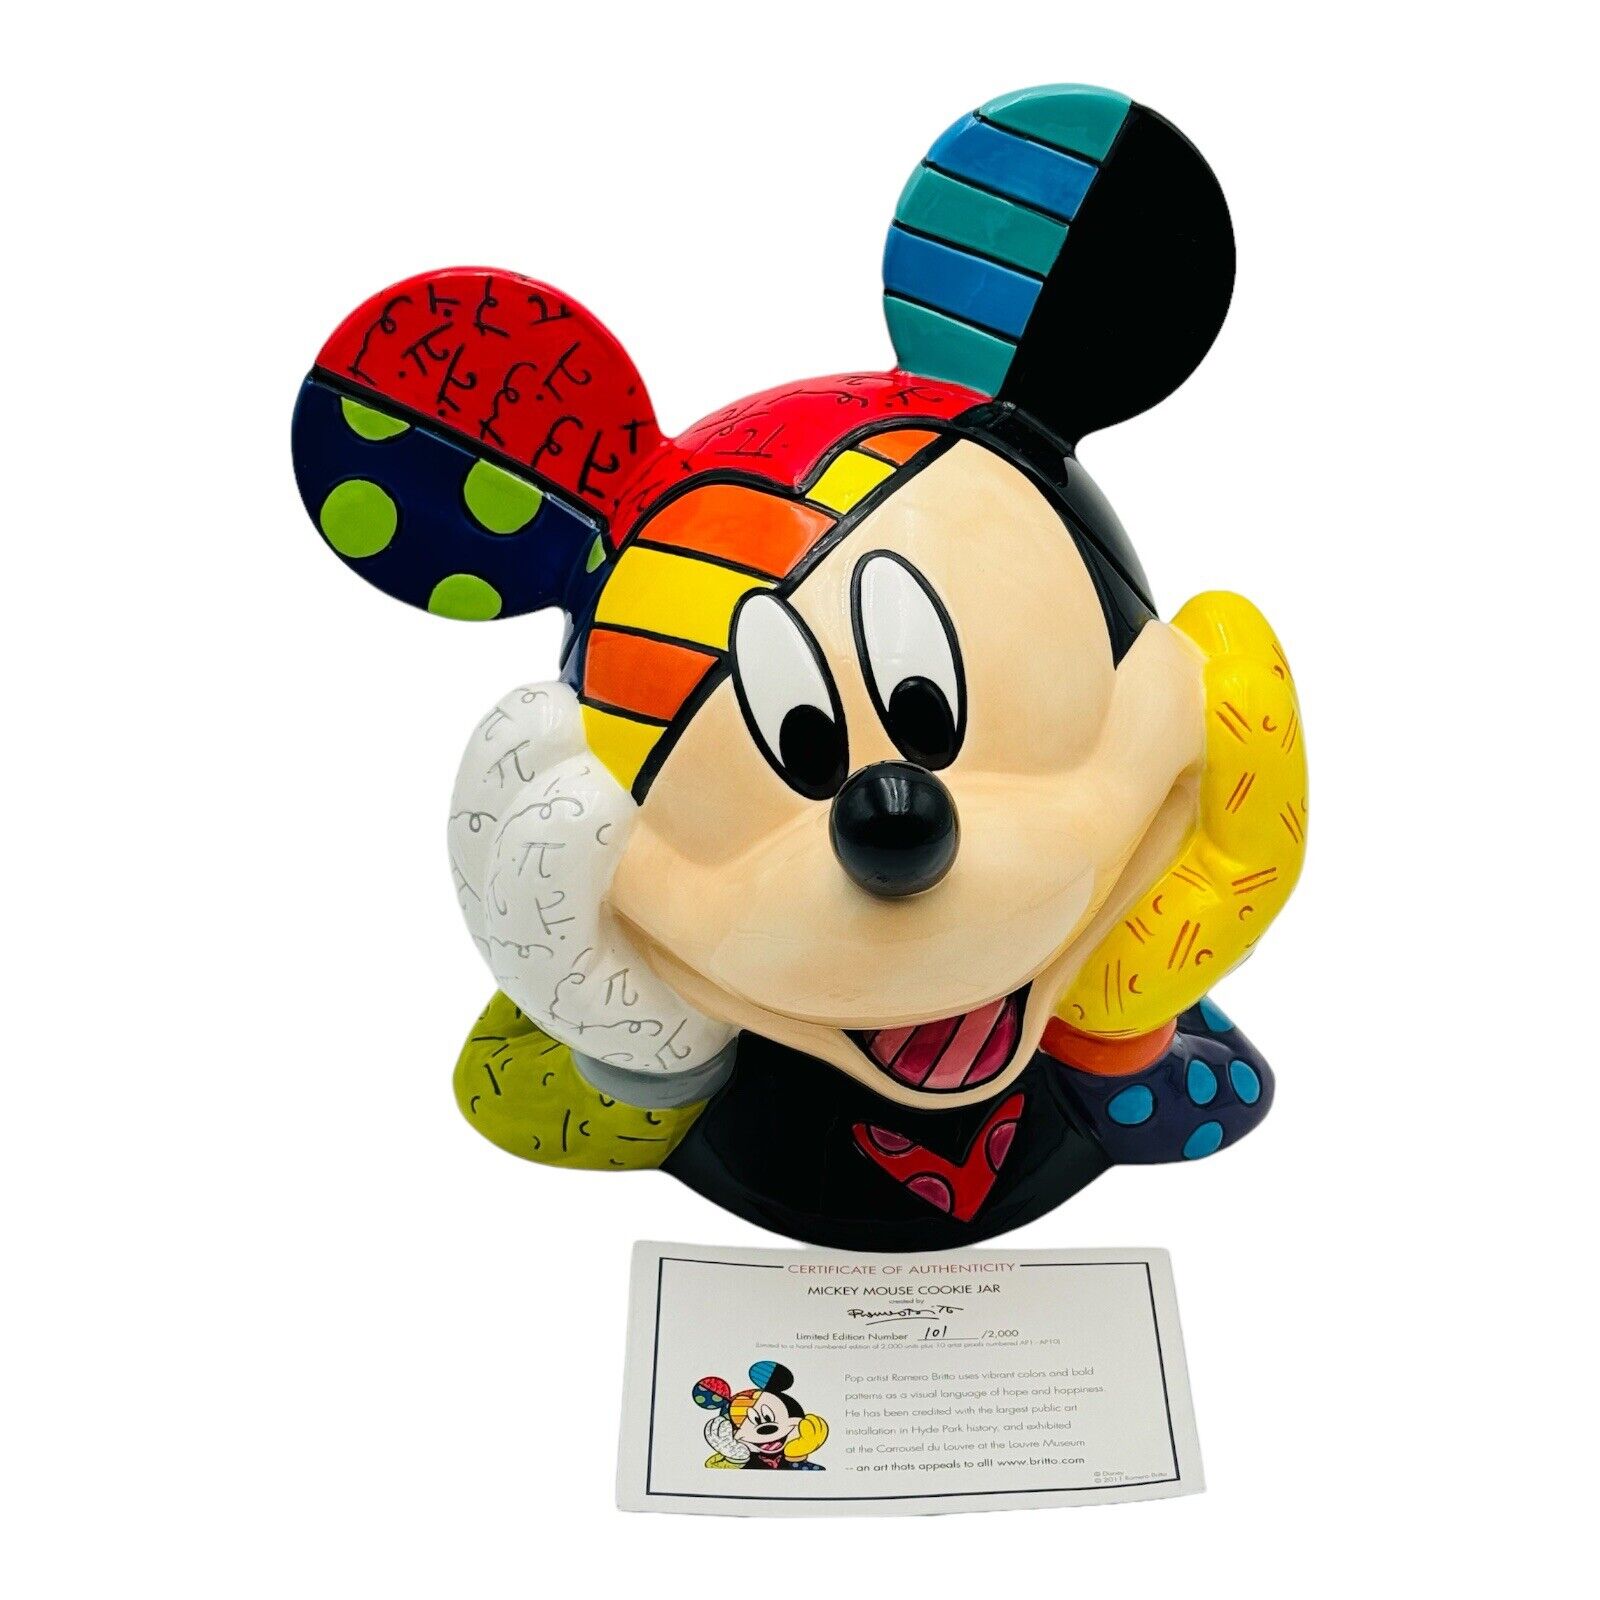 Disney Romero Britto Mickey Mouse Head Cookie Jar LE 101/2000 With COA